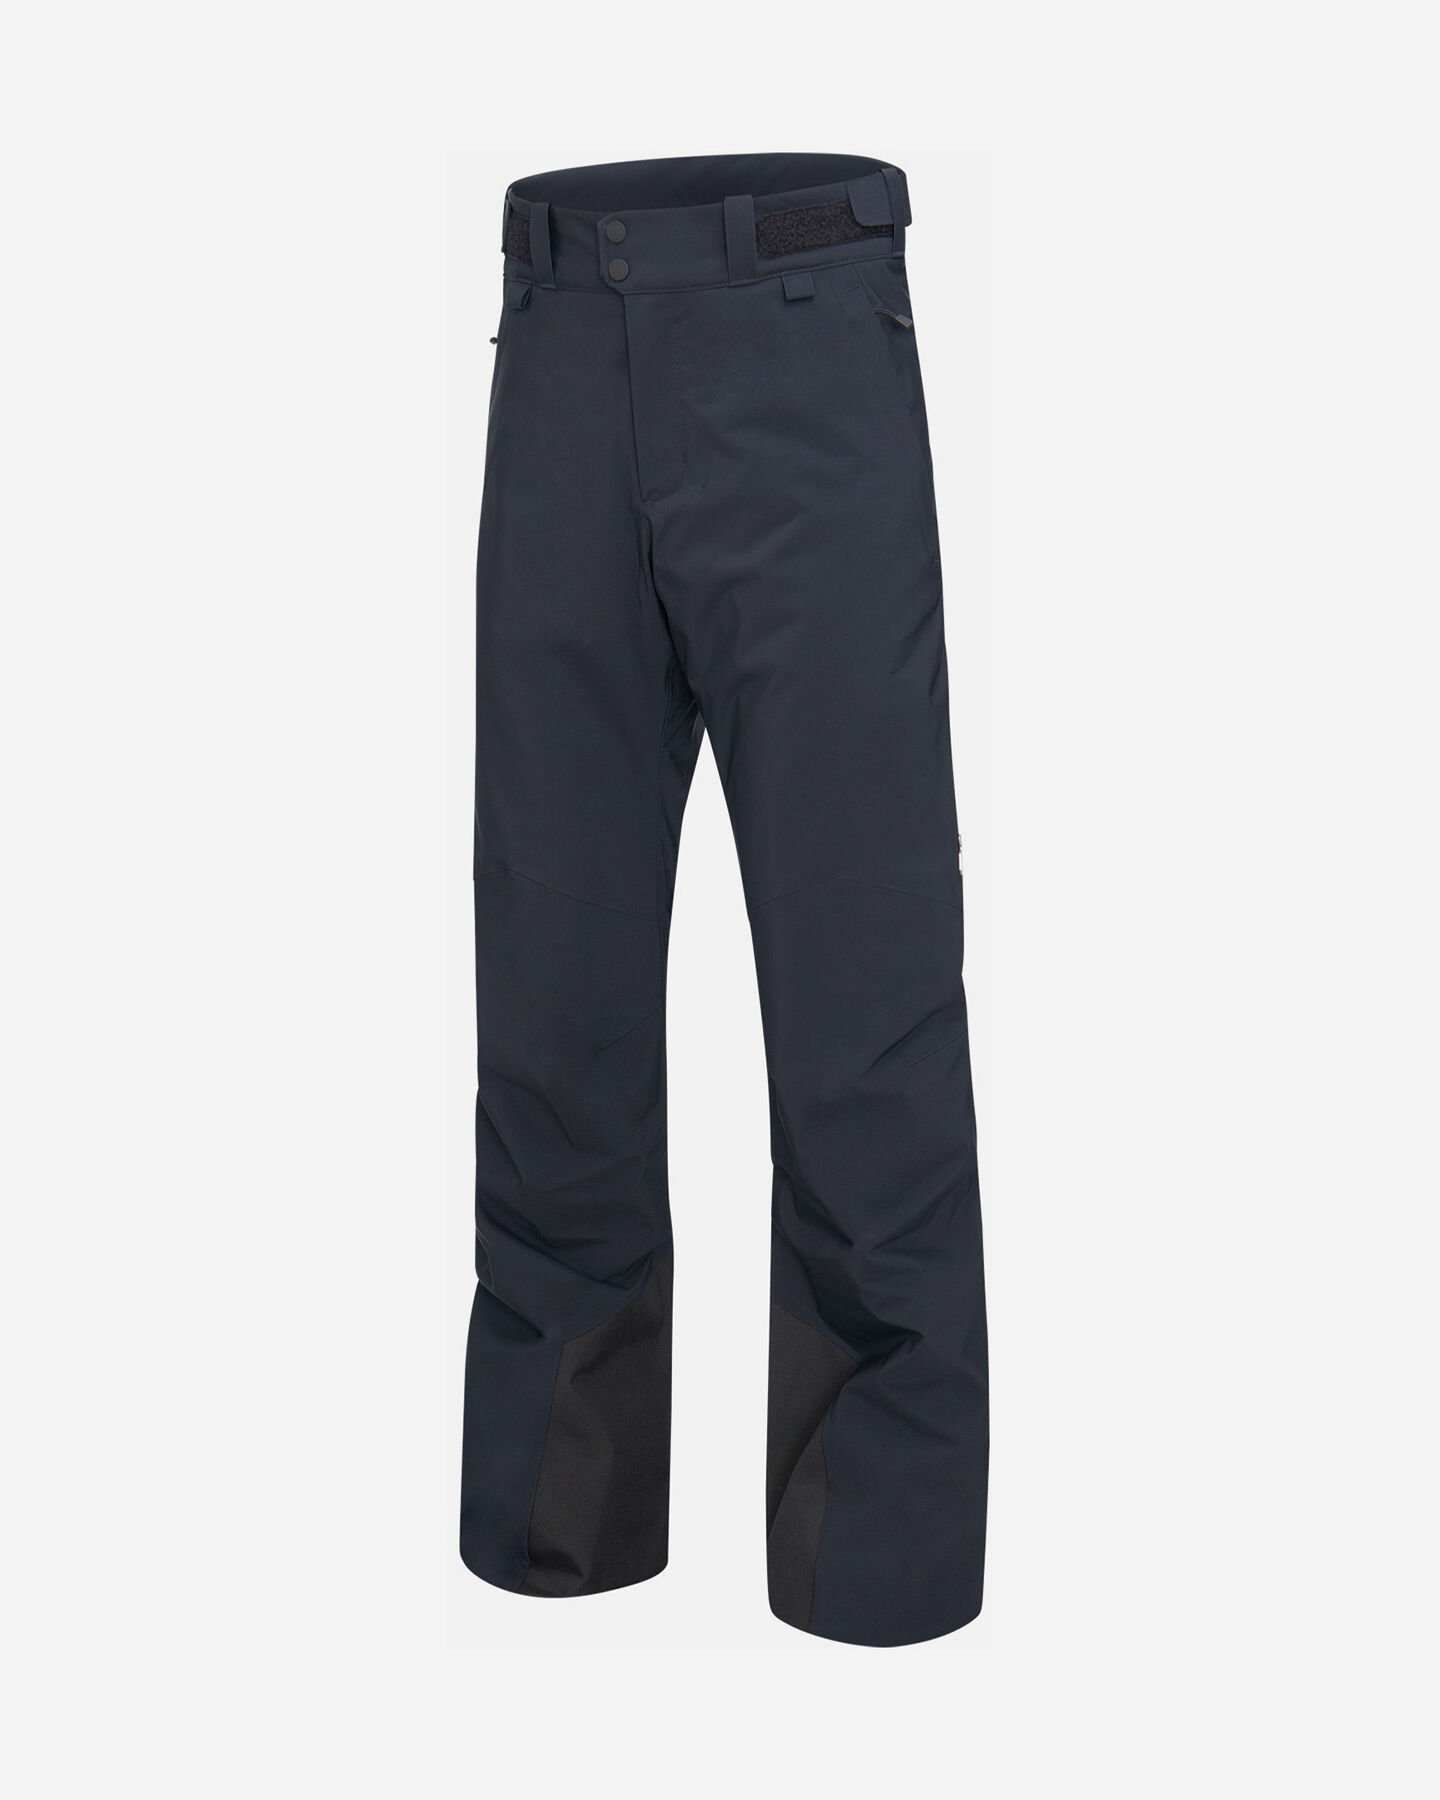  Pantalone sci PEAK PERFORMANCE MAROON M S4099101|1|S scatto 1